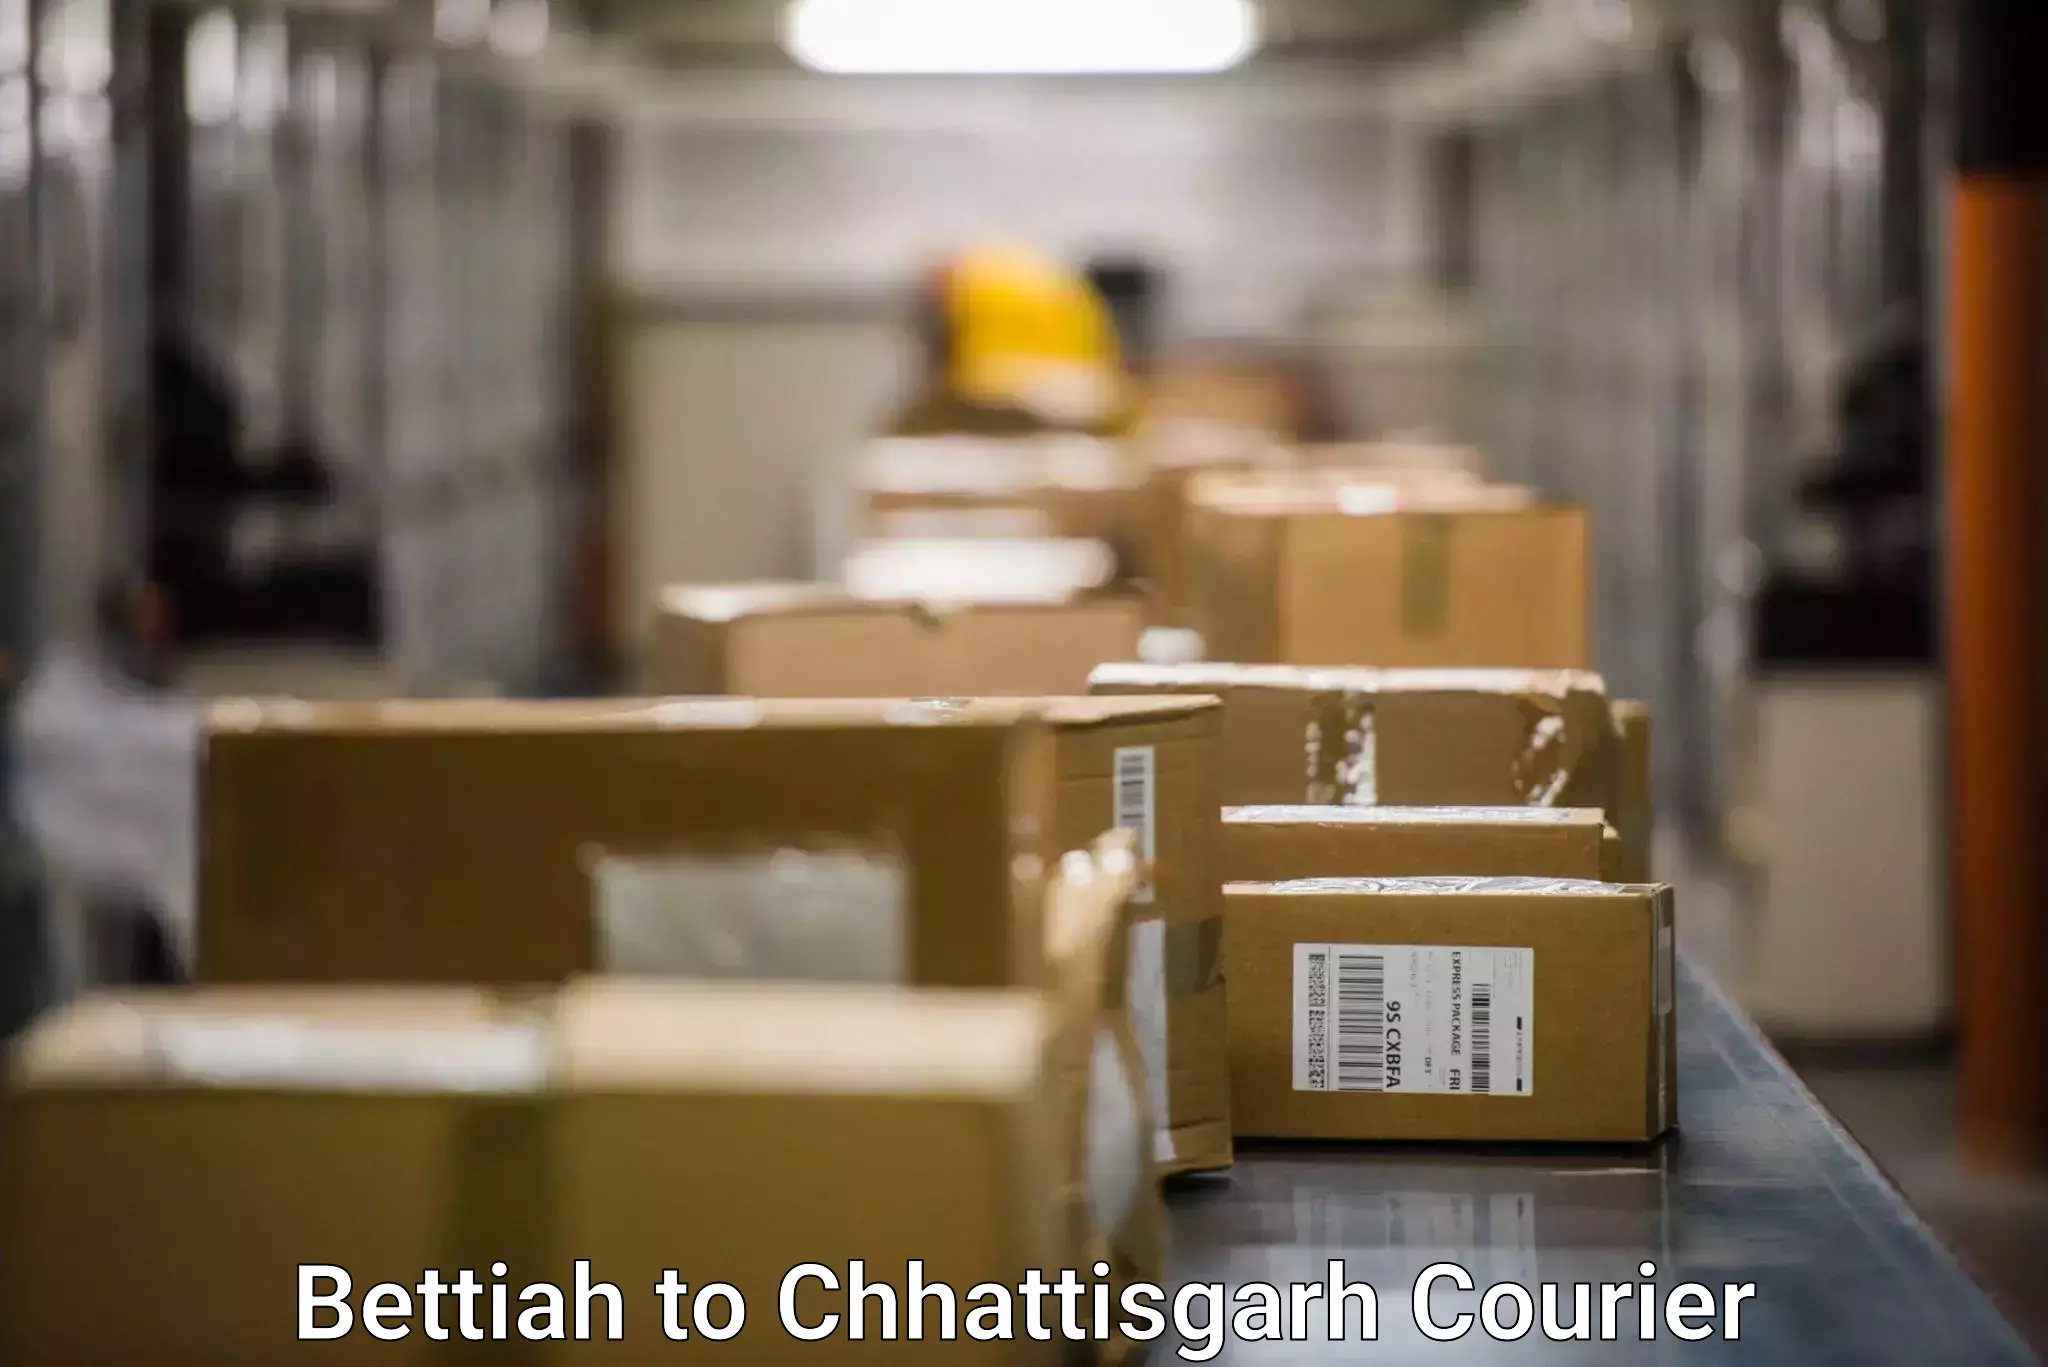 Courier service booking Bettiah to Raigarh